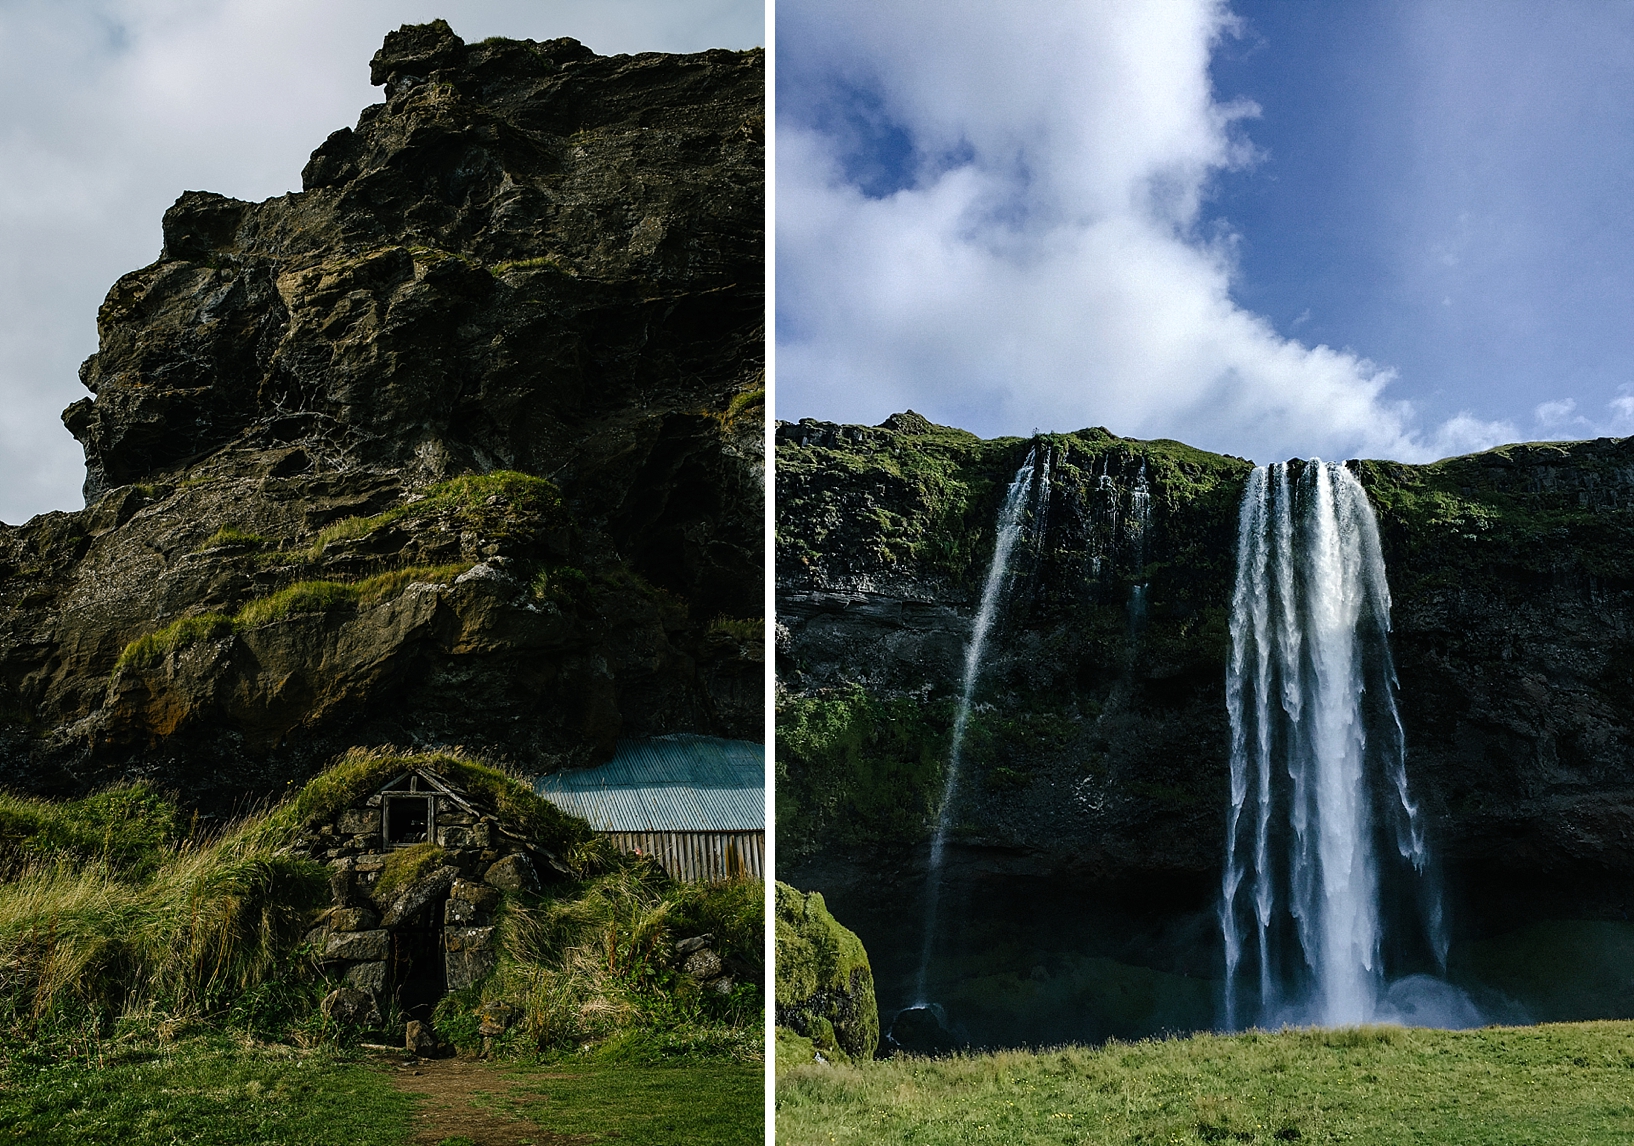 Seljalandsfoss waterfall in Iceland